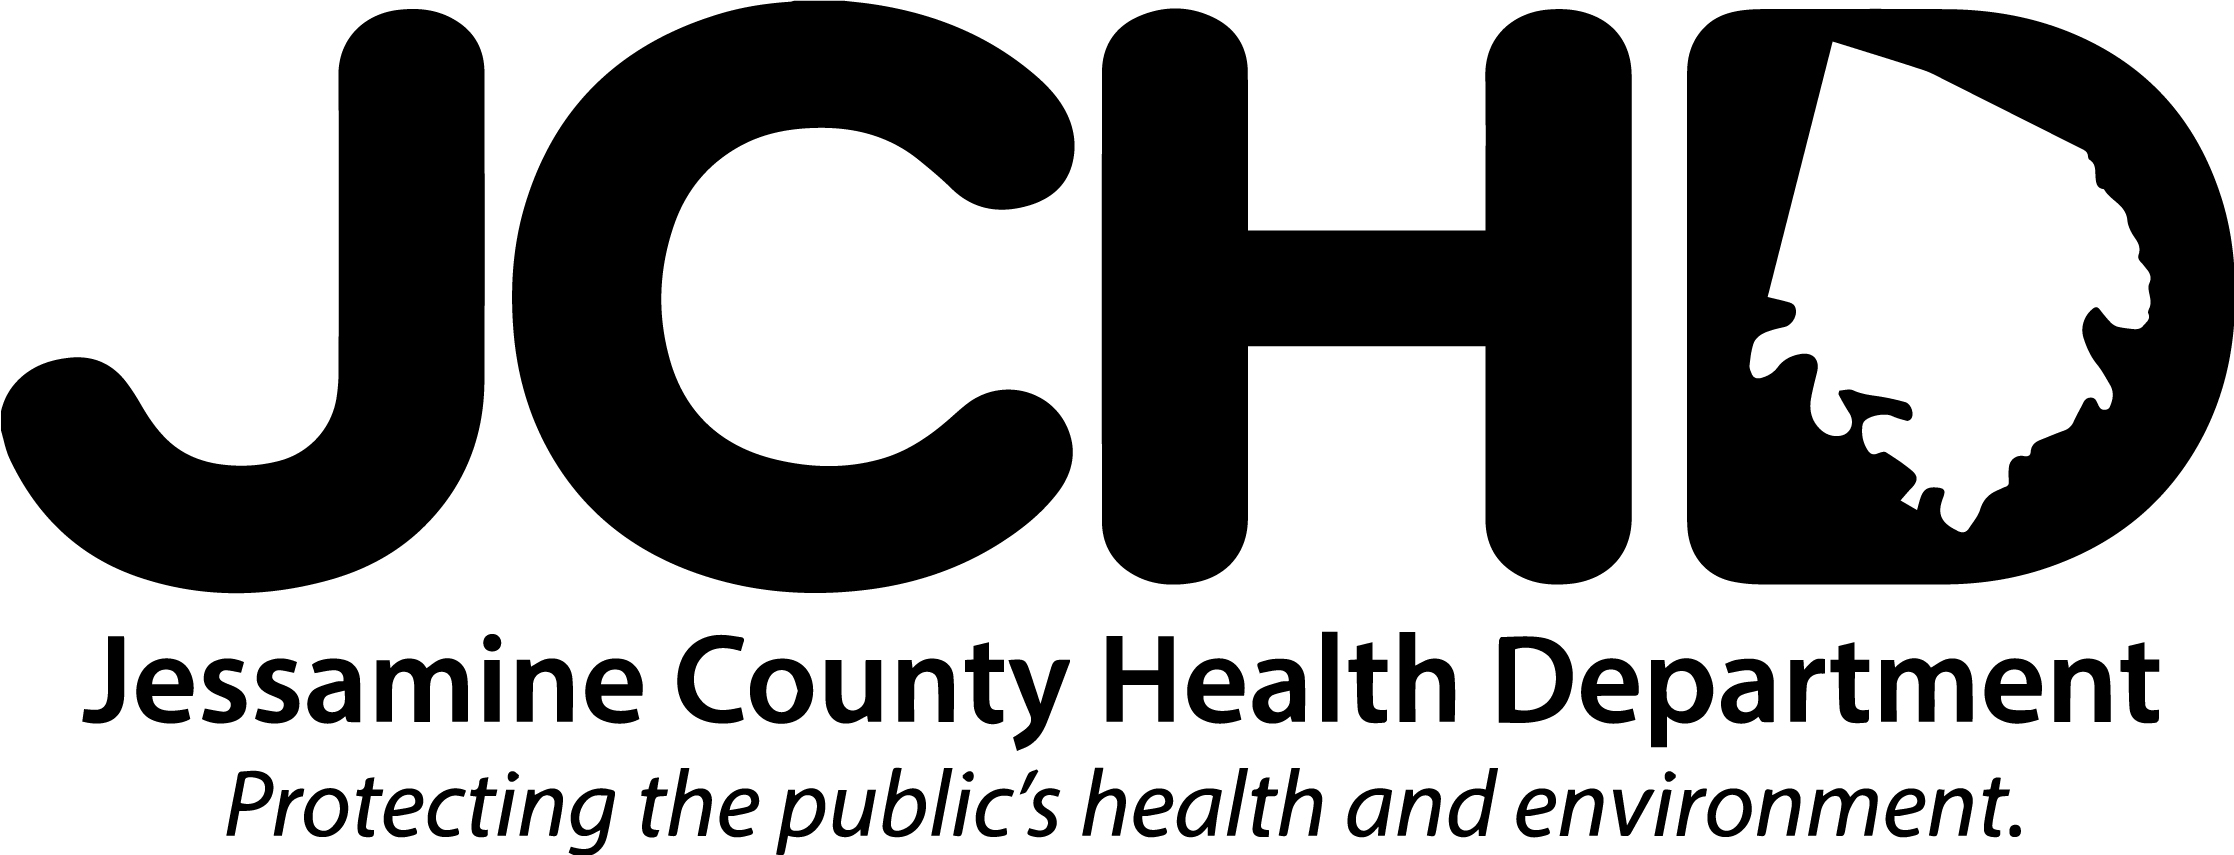 Jessamine County Health Department - Public Health Accreditation Board